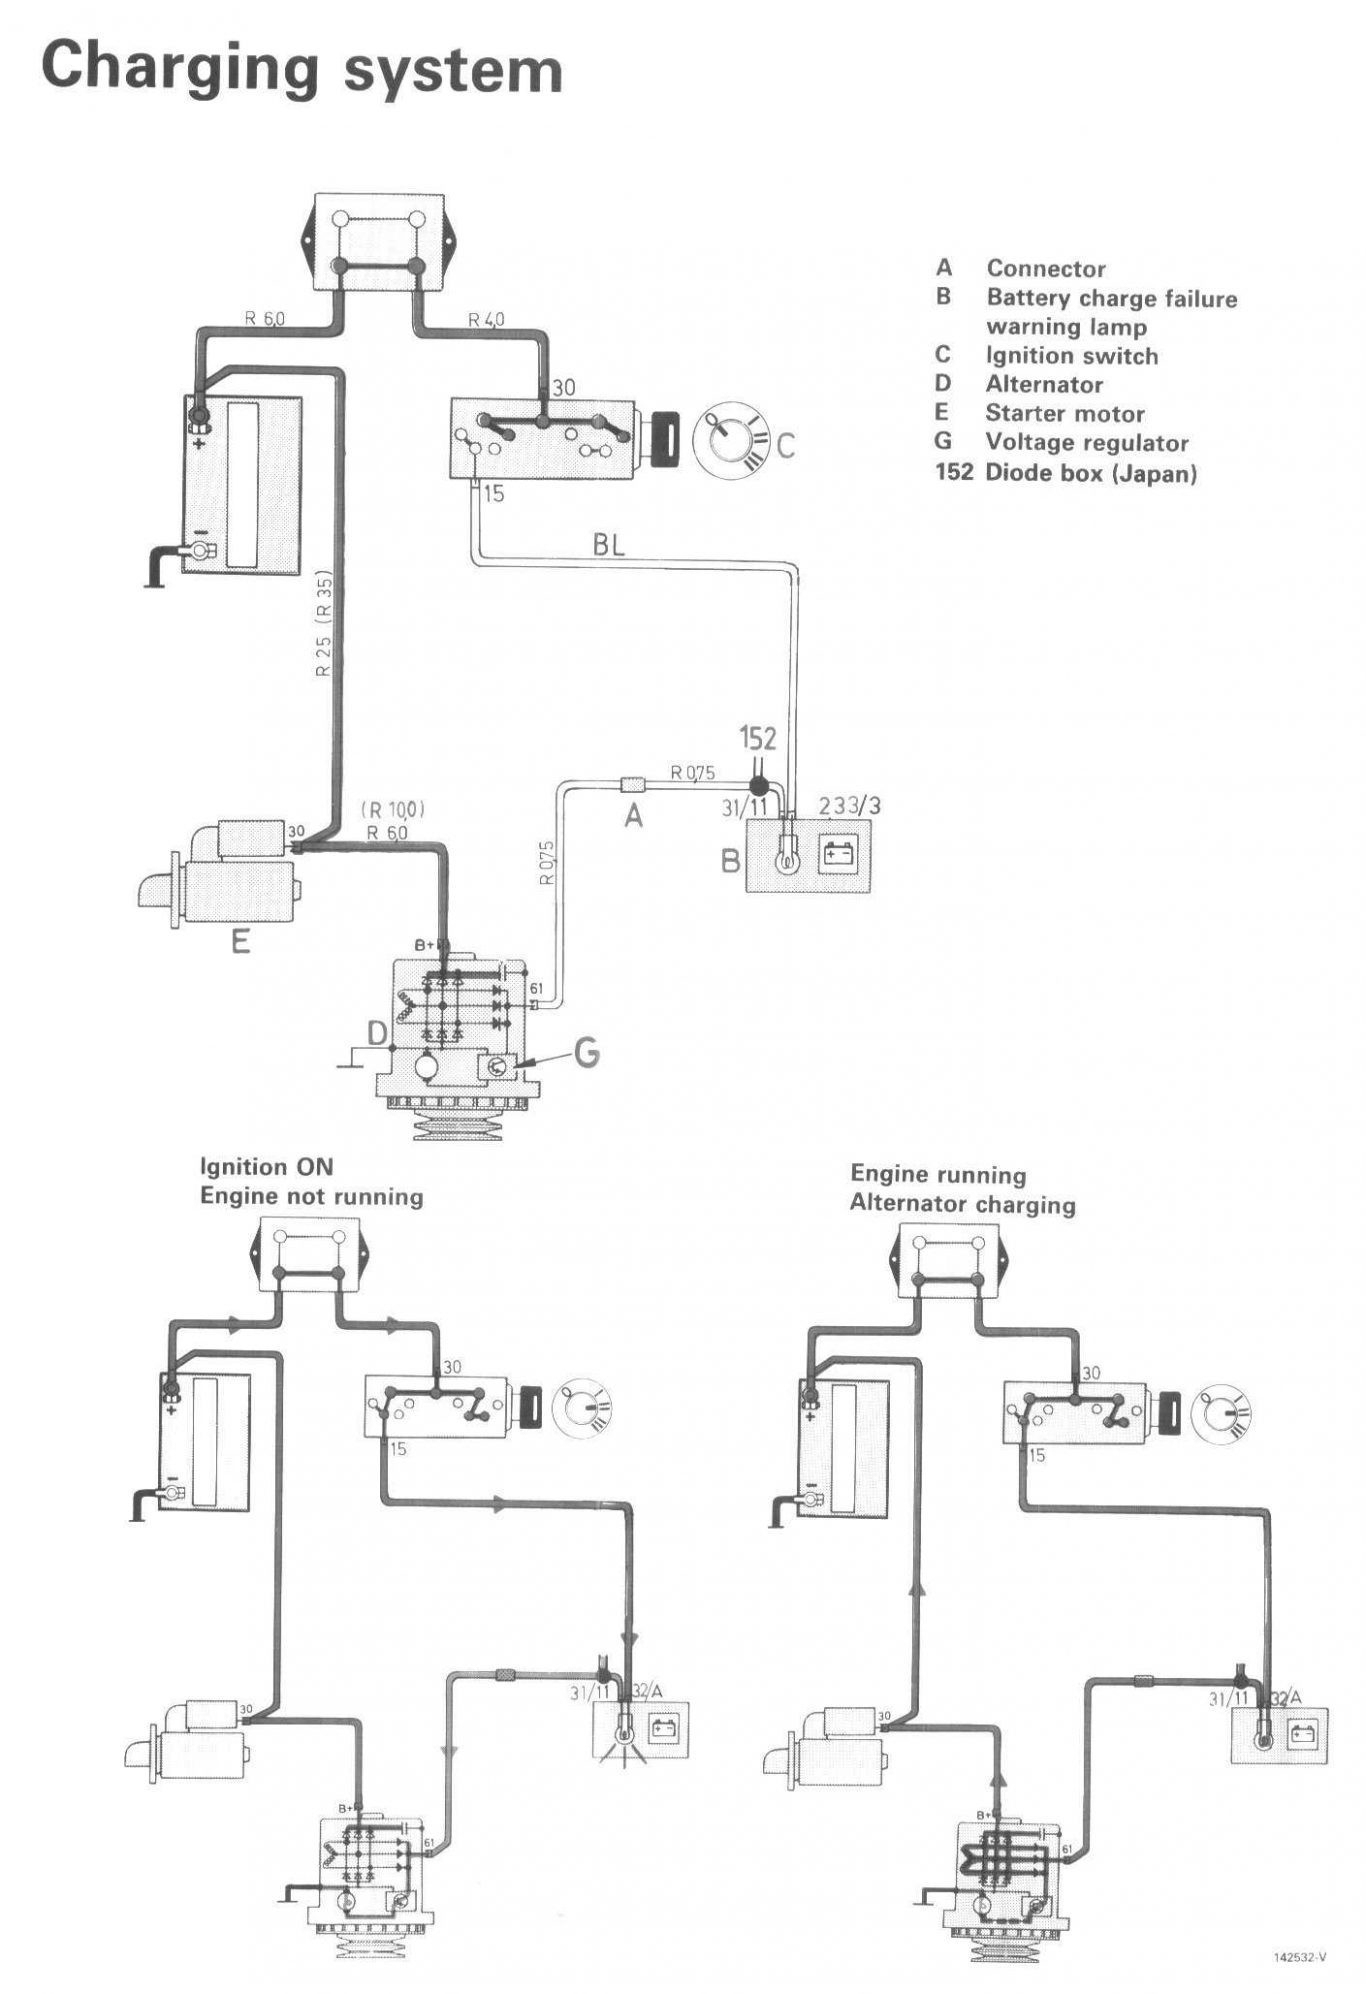 Ford One Wire Alternator Wiring Diagram | Free Wiring Diagram - One Wire Alternator Wiring Diagram Chevy